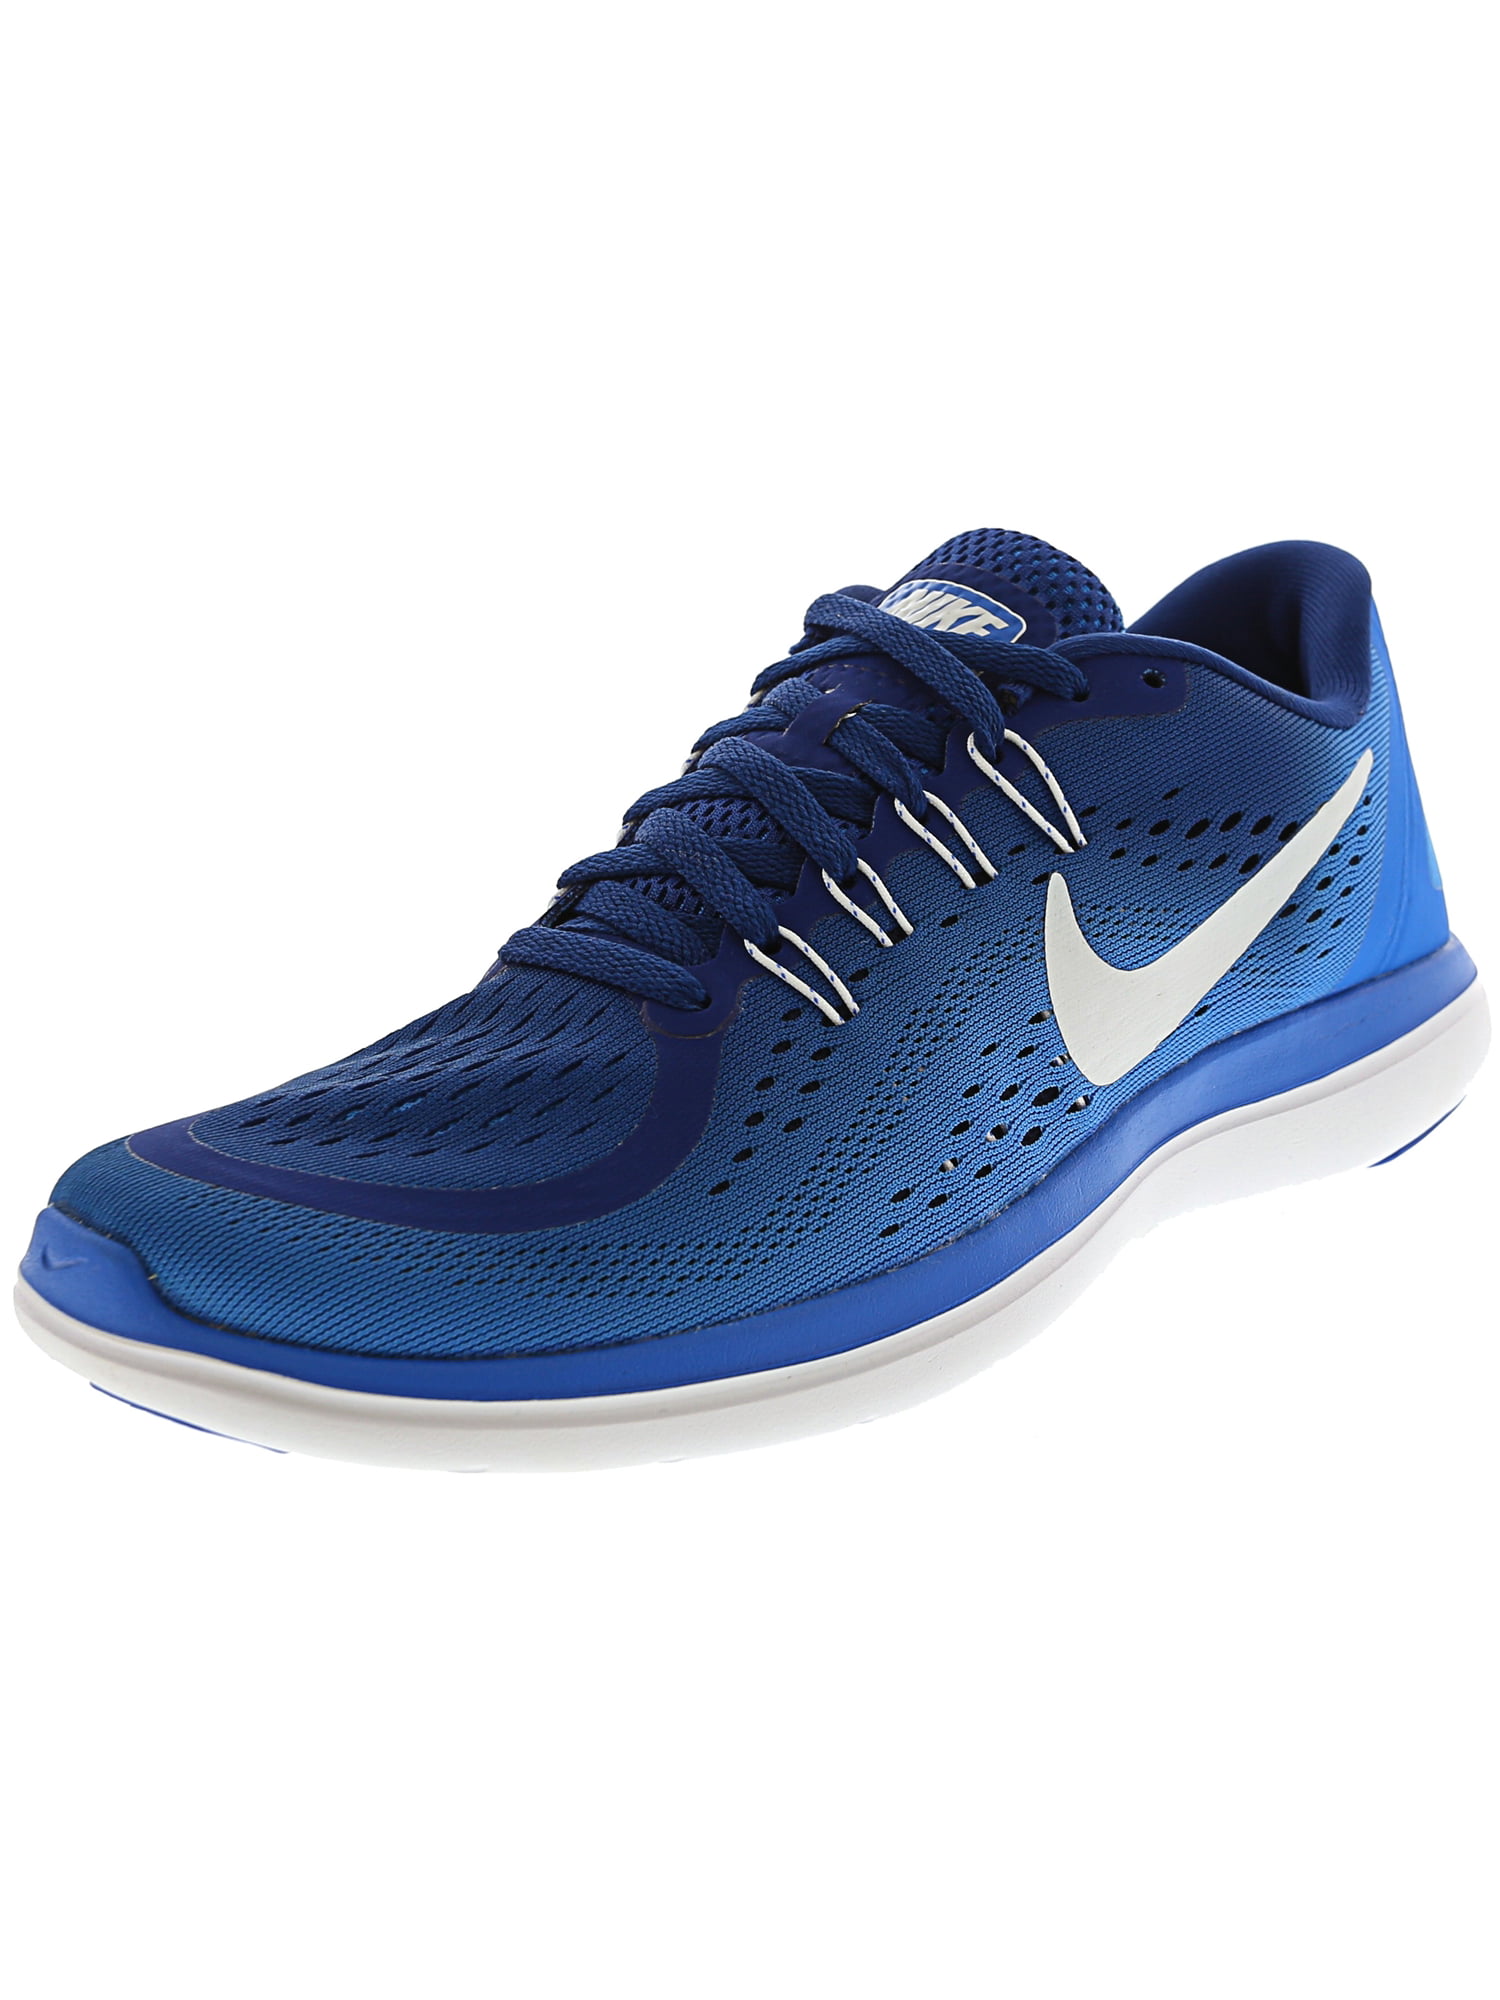 Nike Men's Flex 2017 Rn Gym Blue / White - Photo Ankle-High Running ...